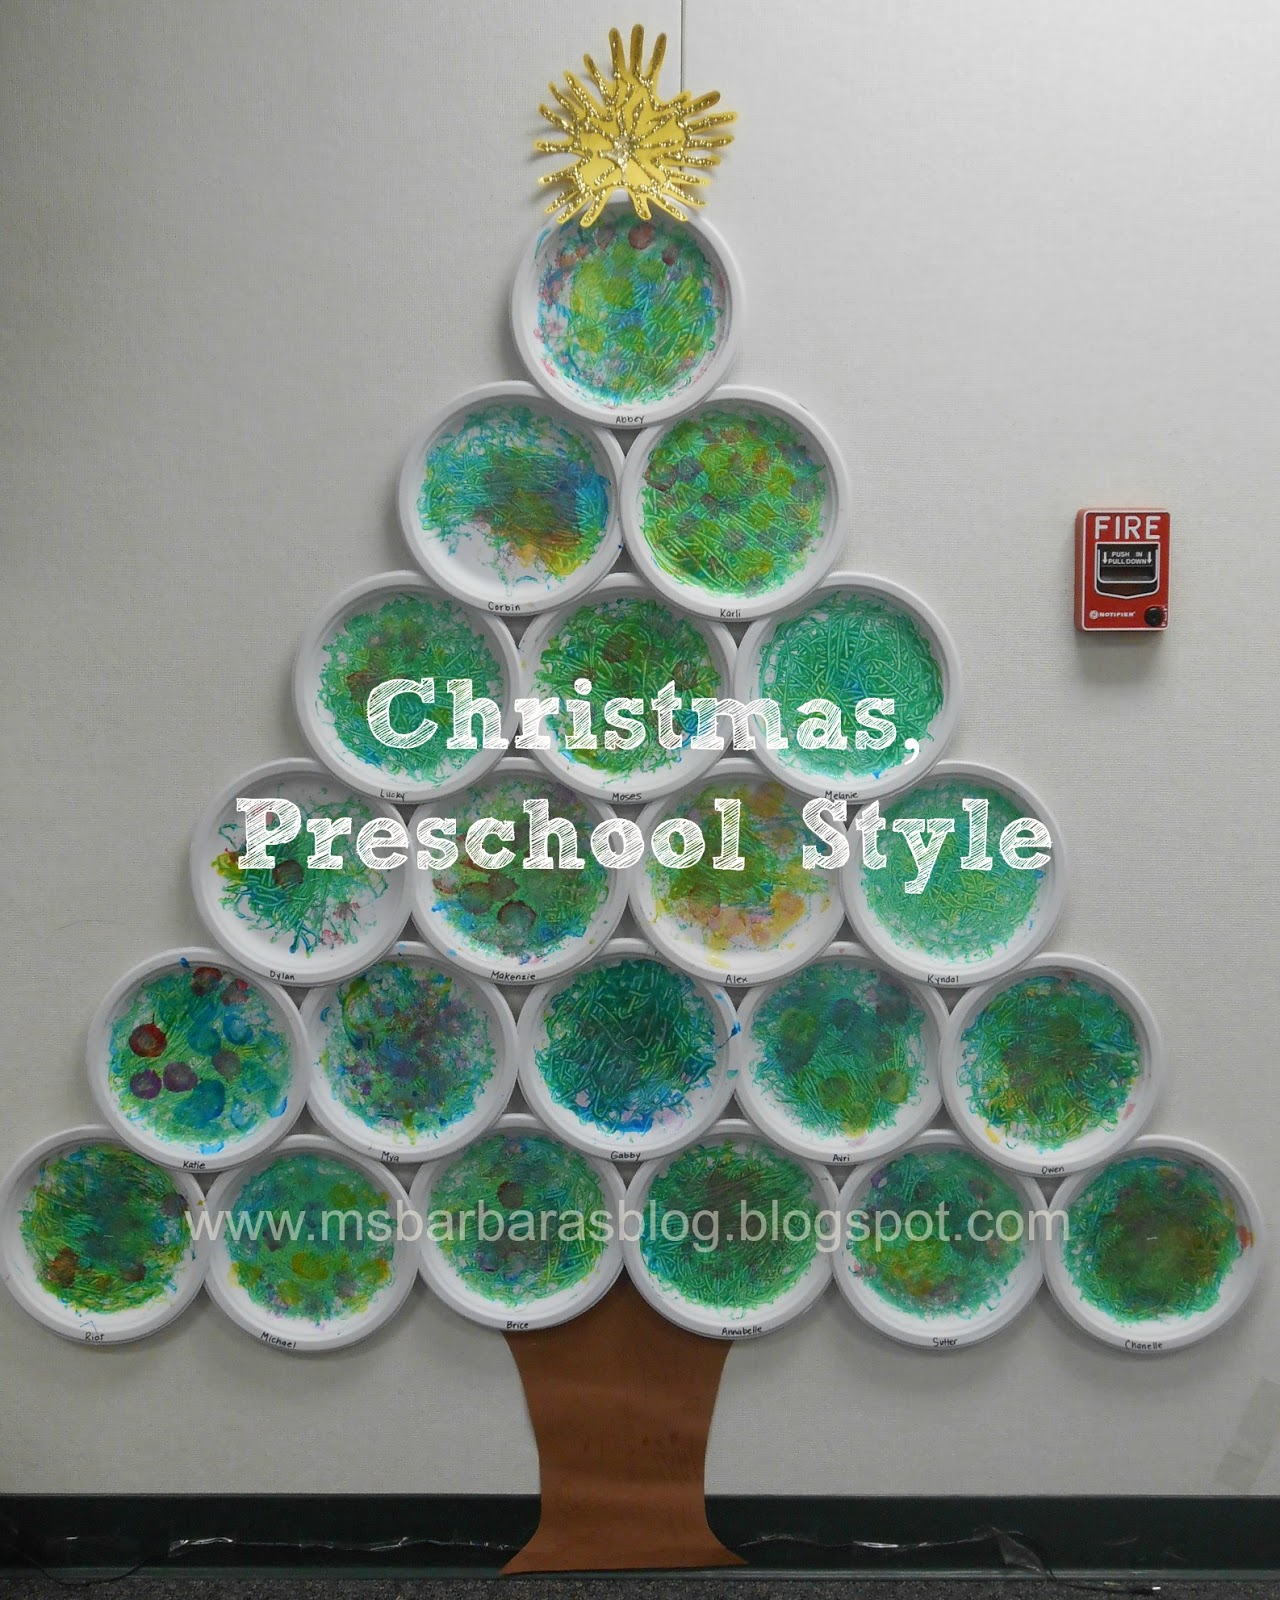 For the Children Christmas, Preschool Style